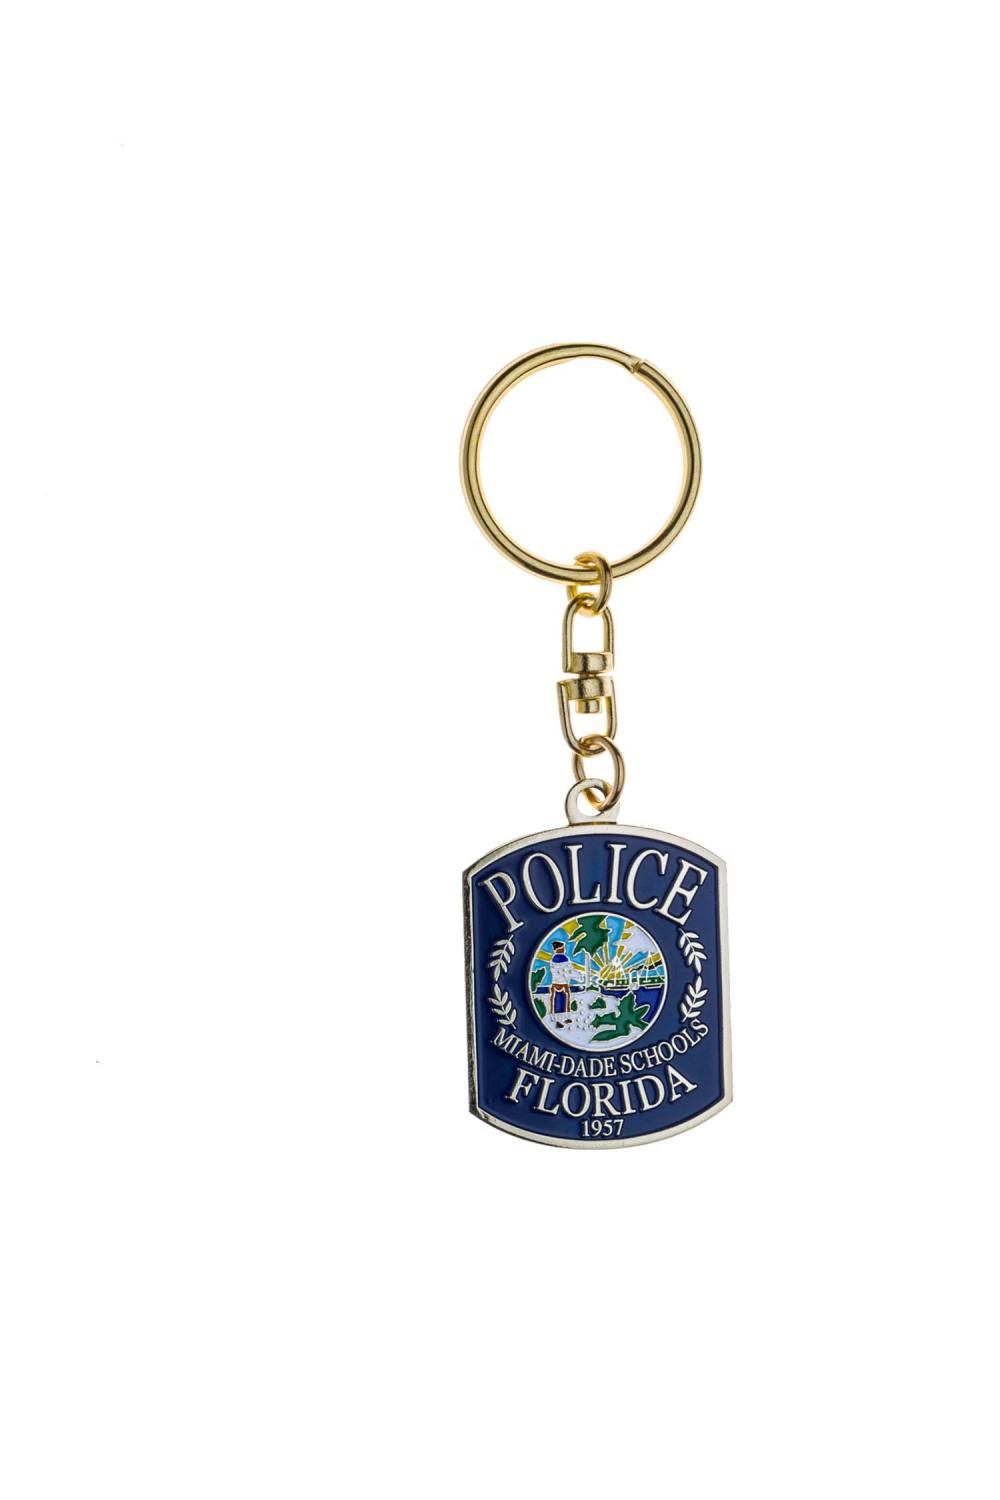 Custom metal police keychains